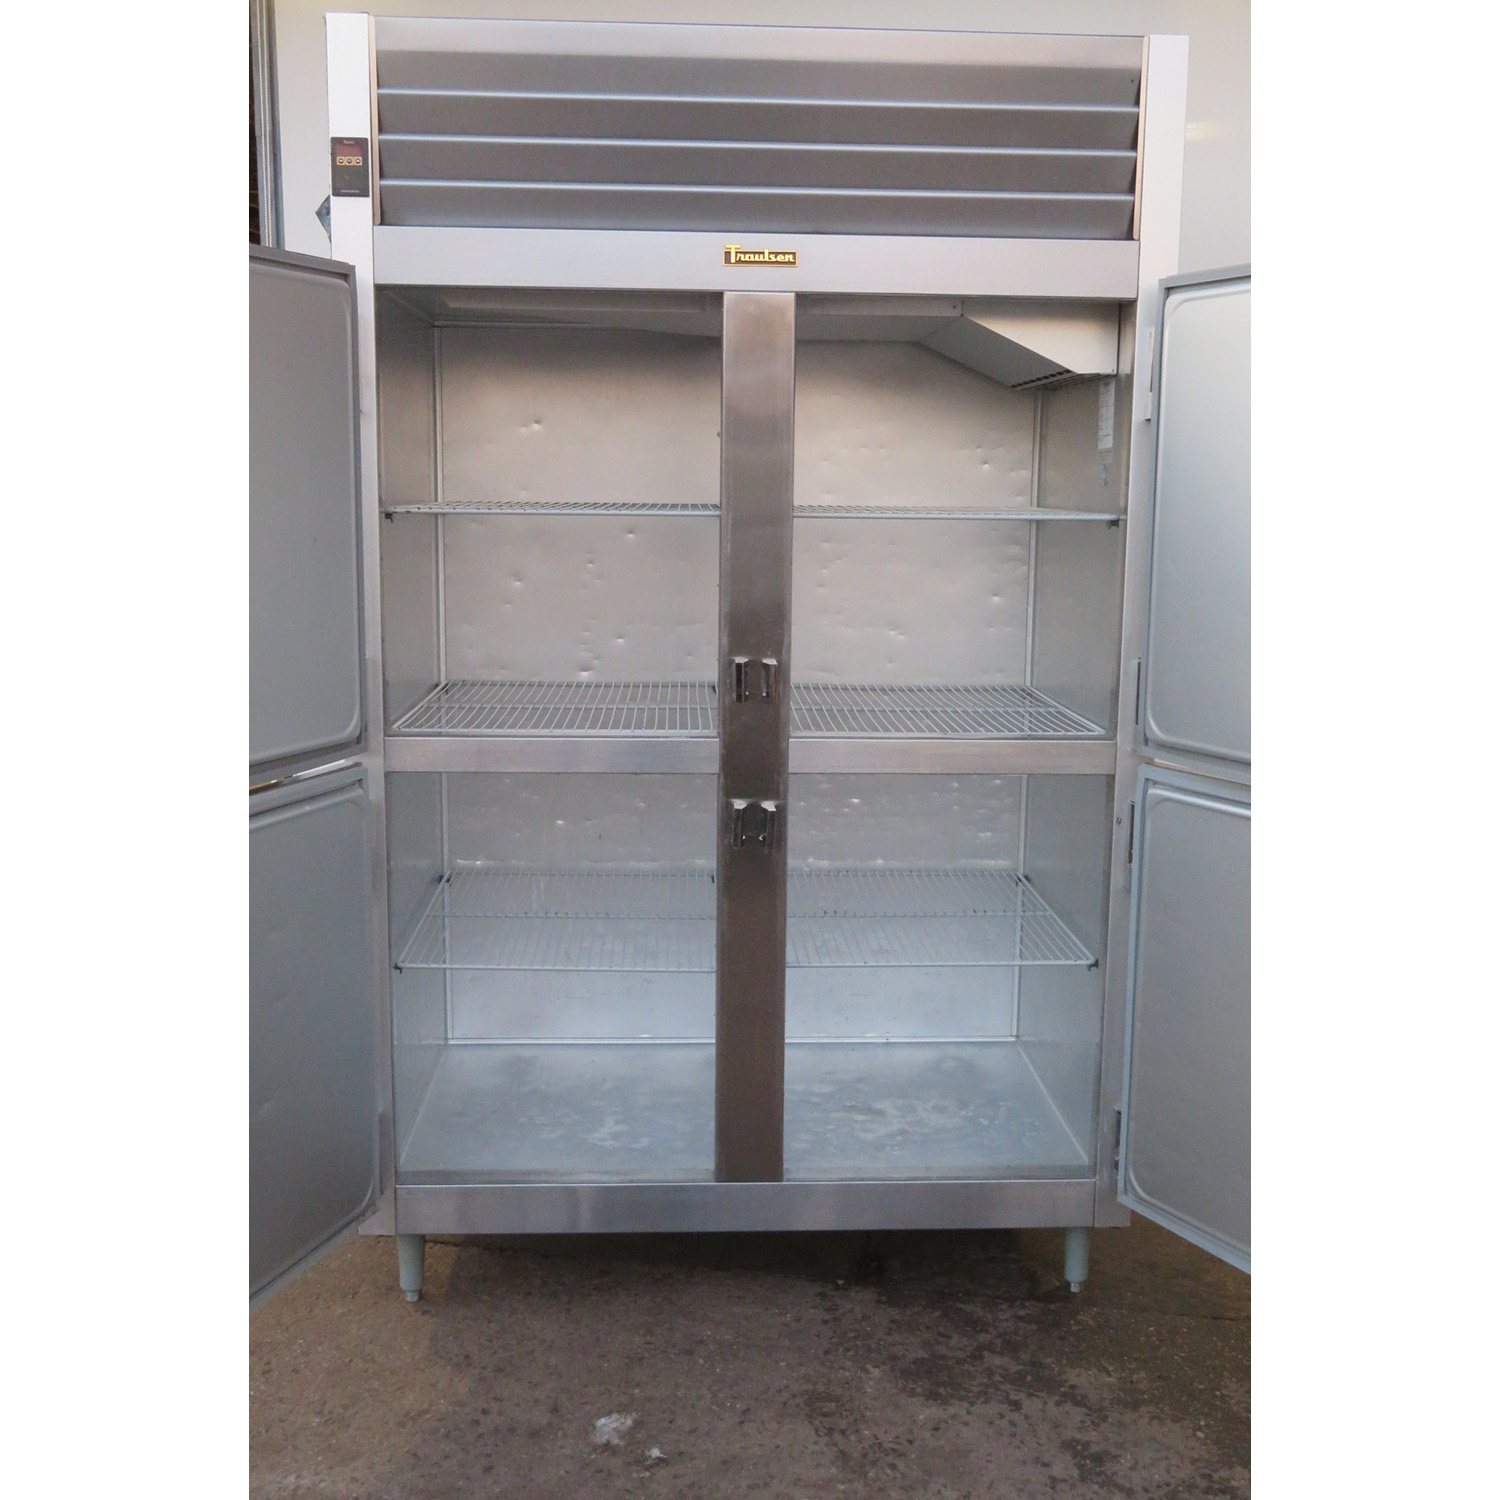 Traulsen G20000 Refrigerator 2 Section Half Door, Used Great Condition image 1